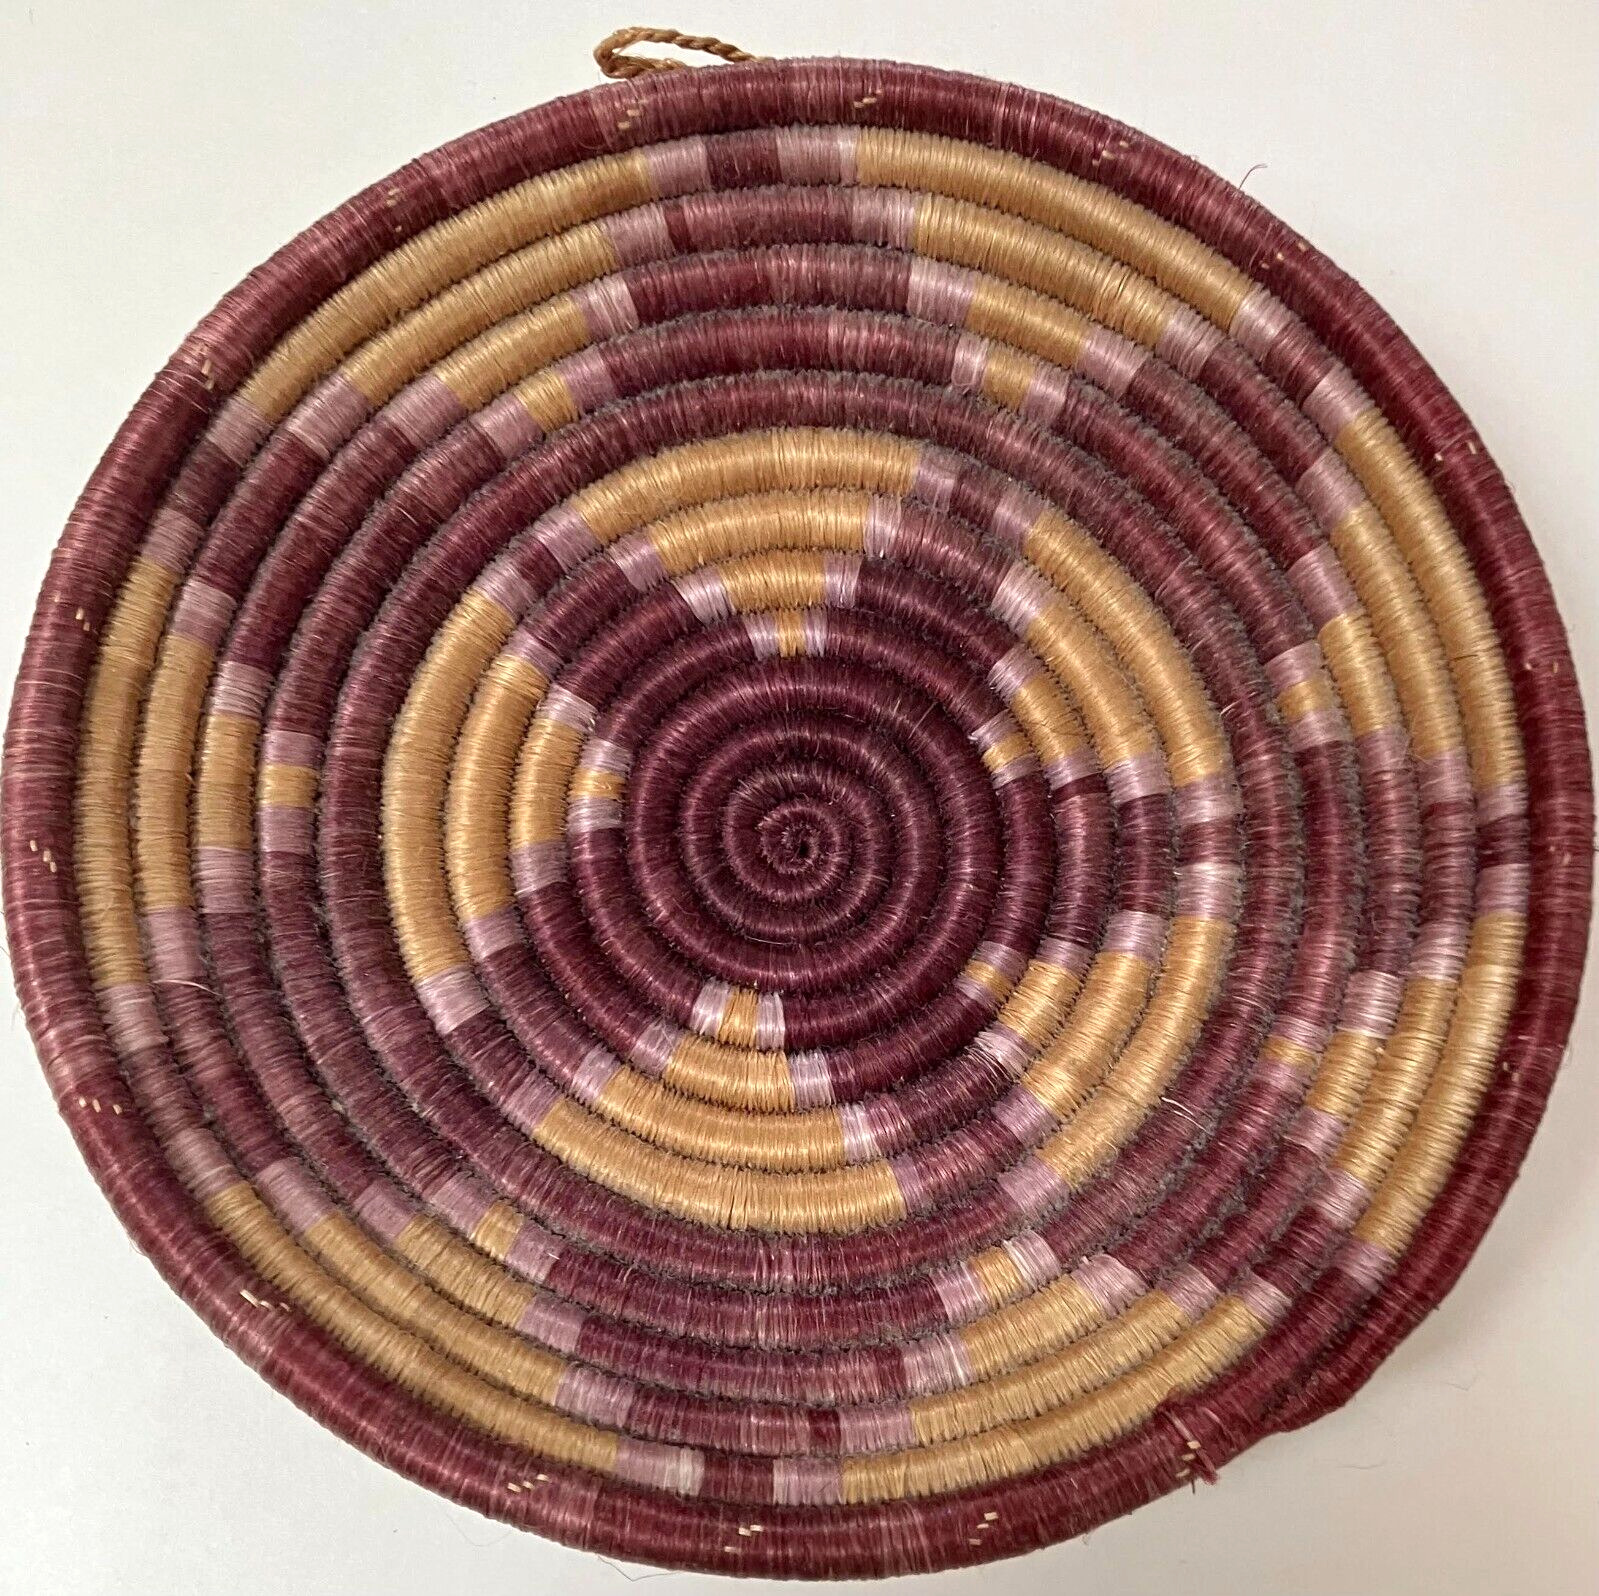 Vintage African Coil Swirl Designed Wall Basket Bowl.